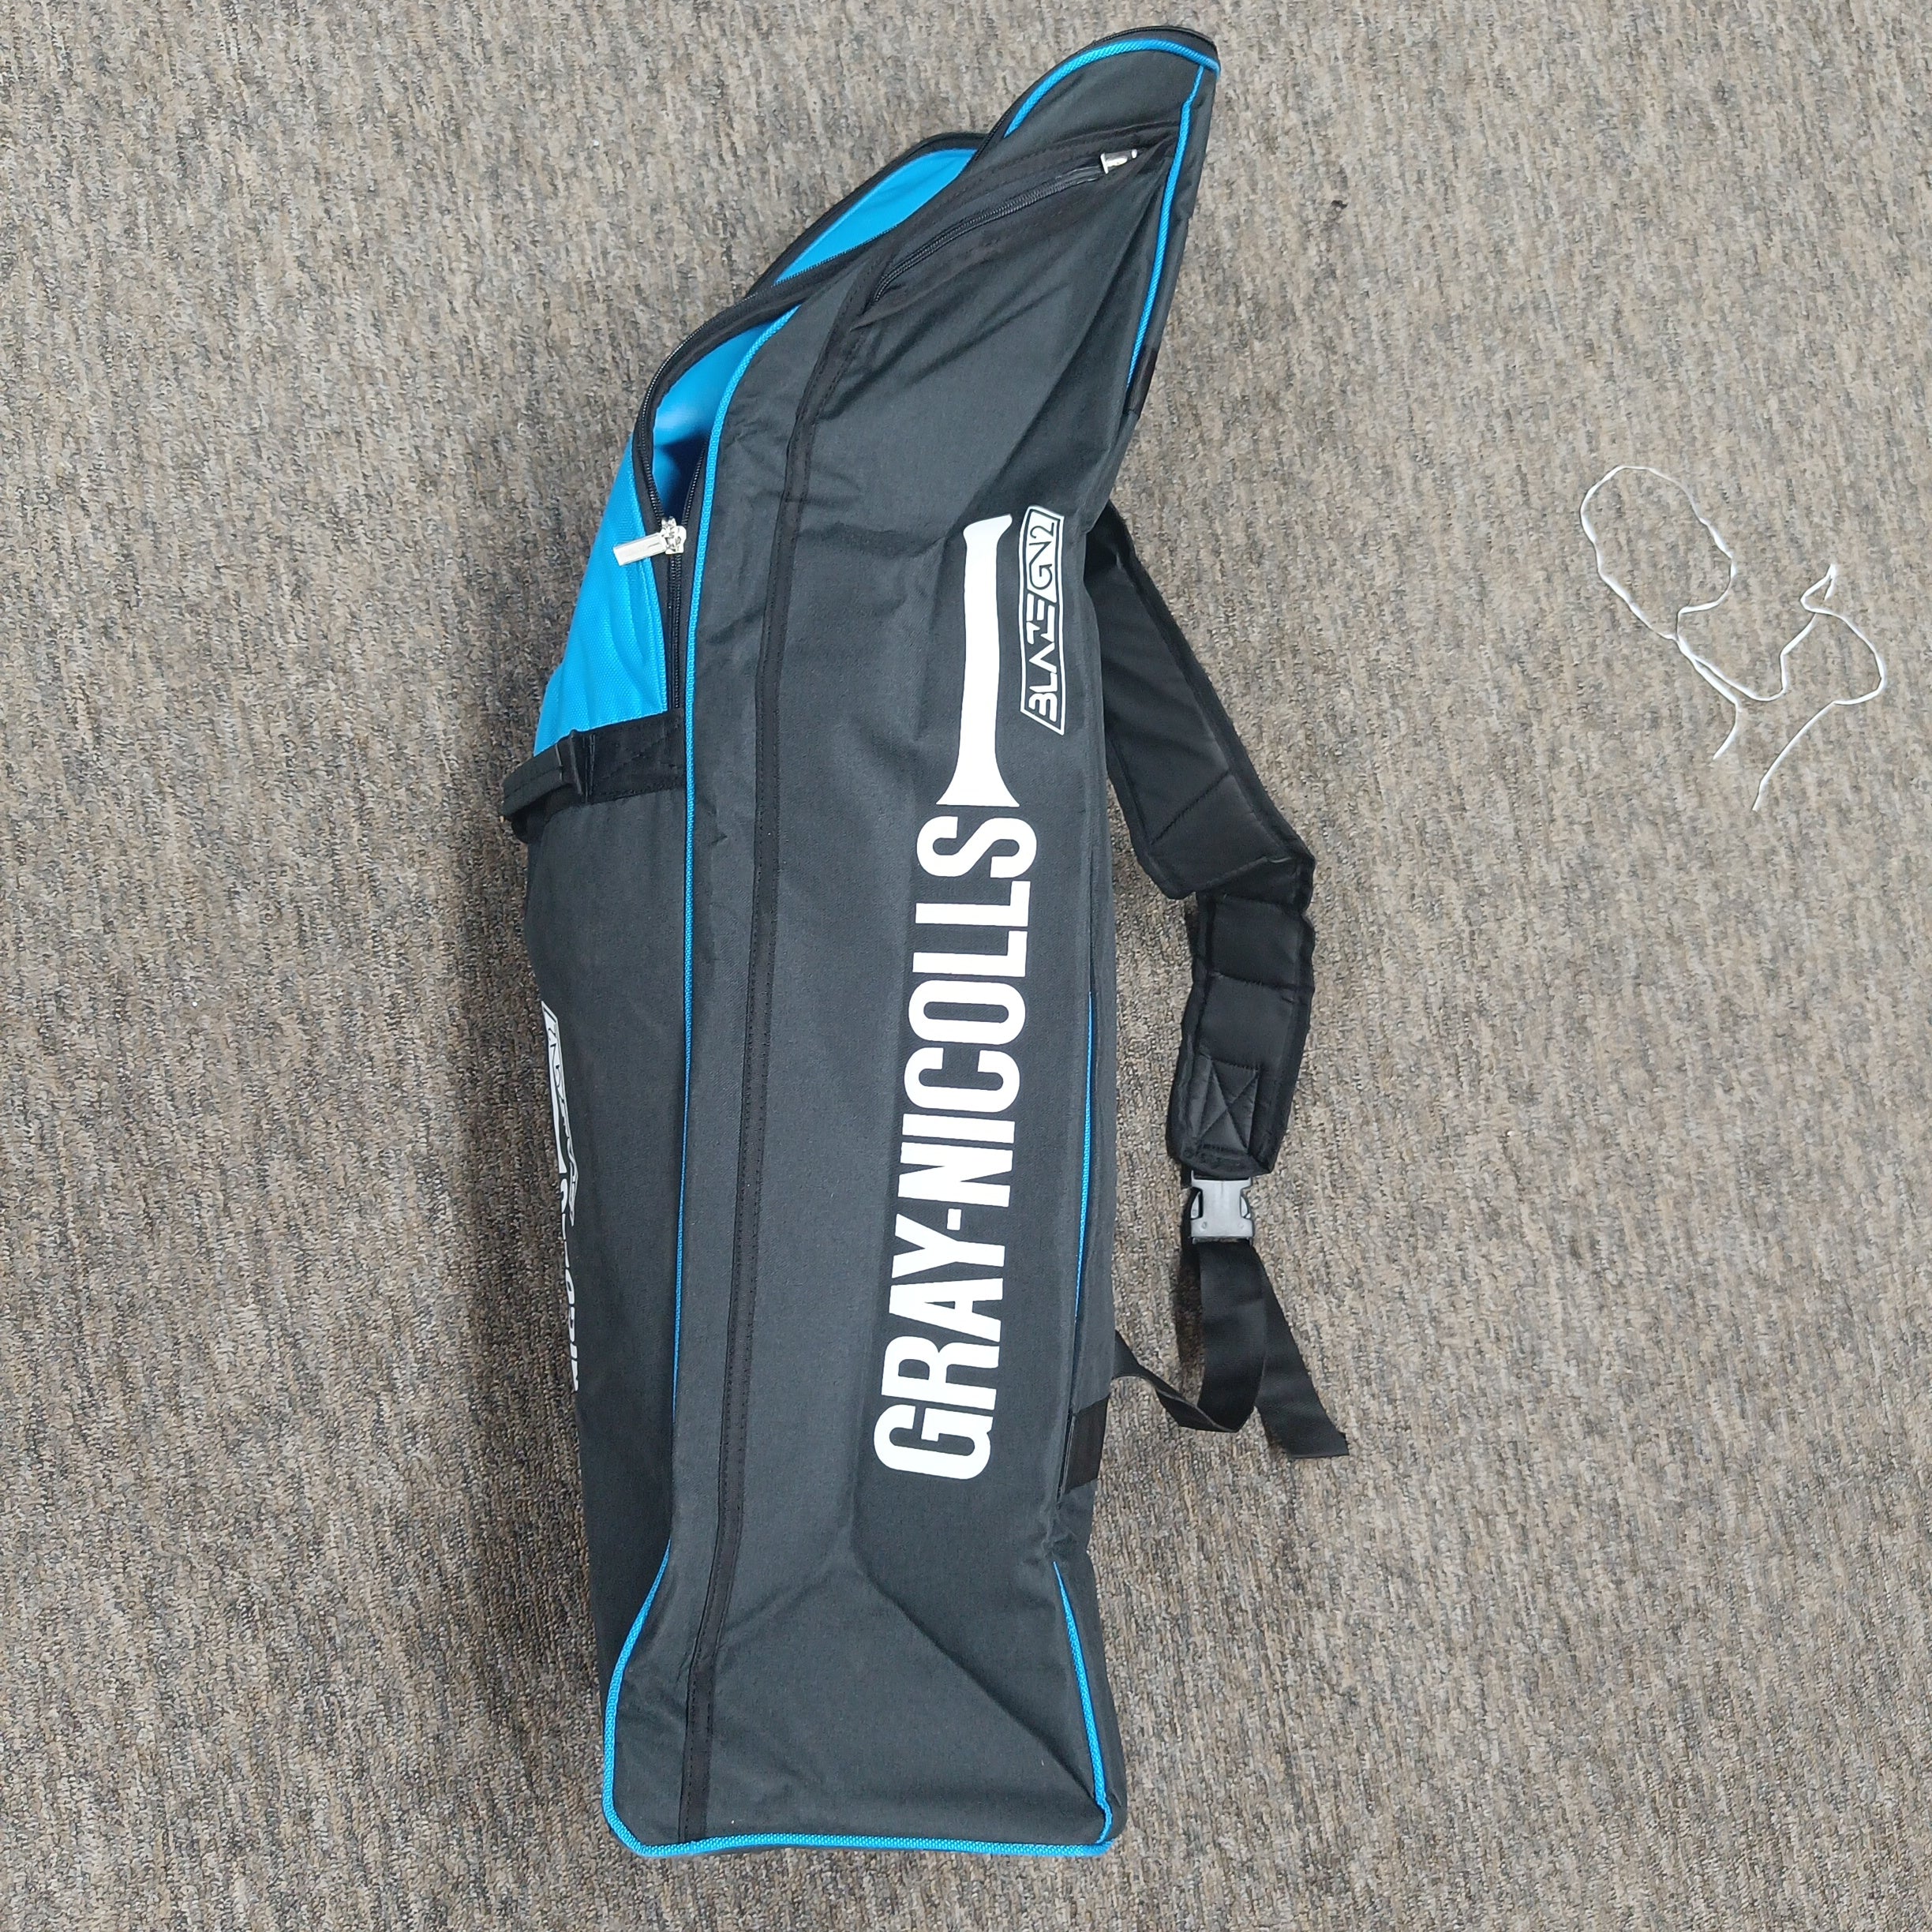 Gray - Nicolls 2 Academy Cricket Kit Bag